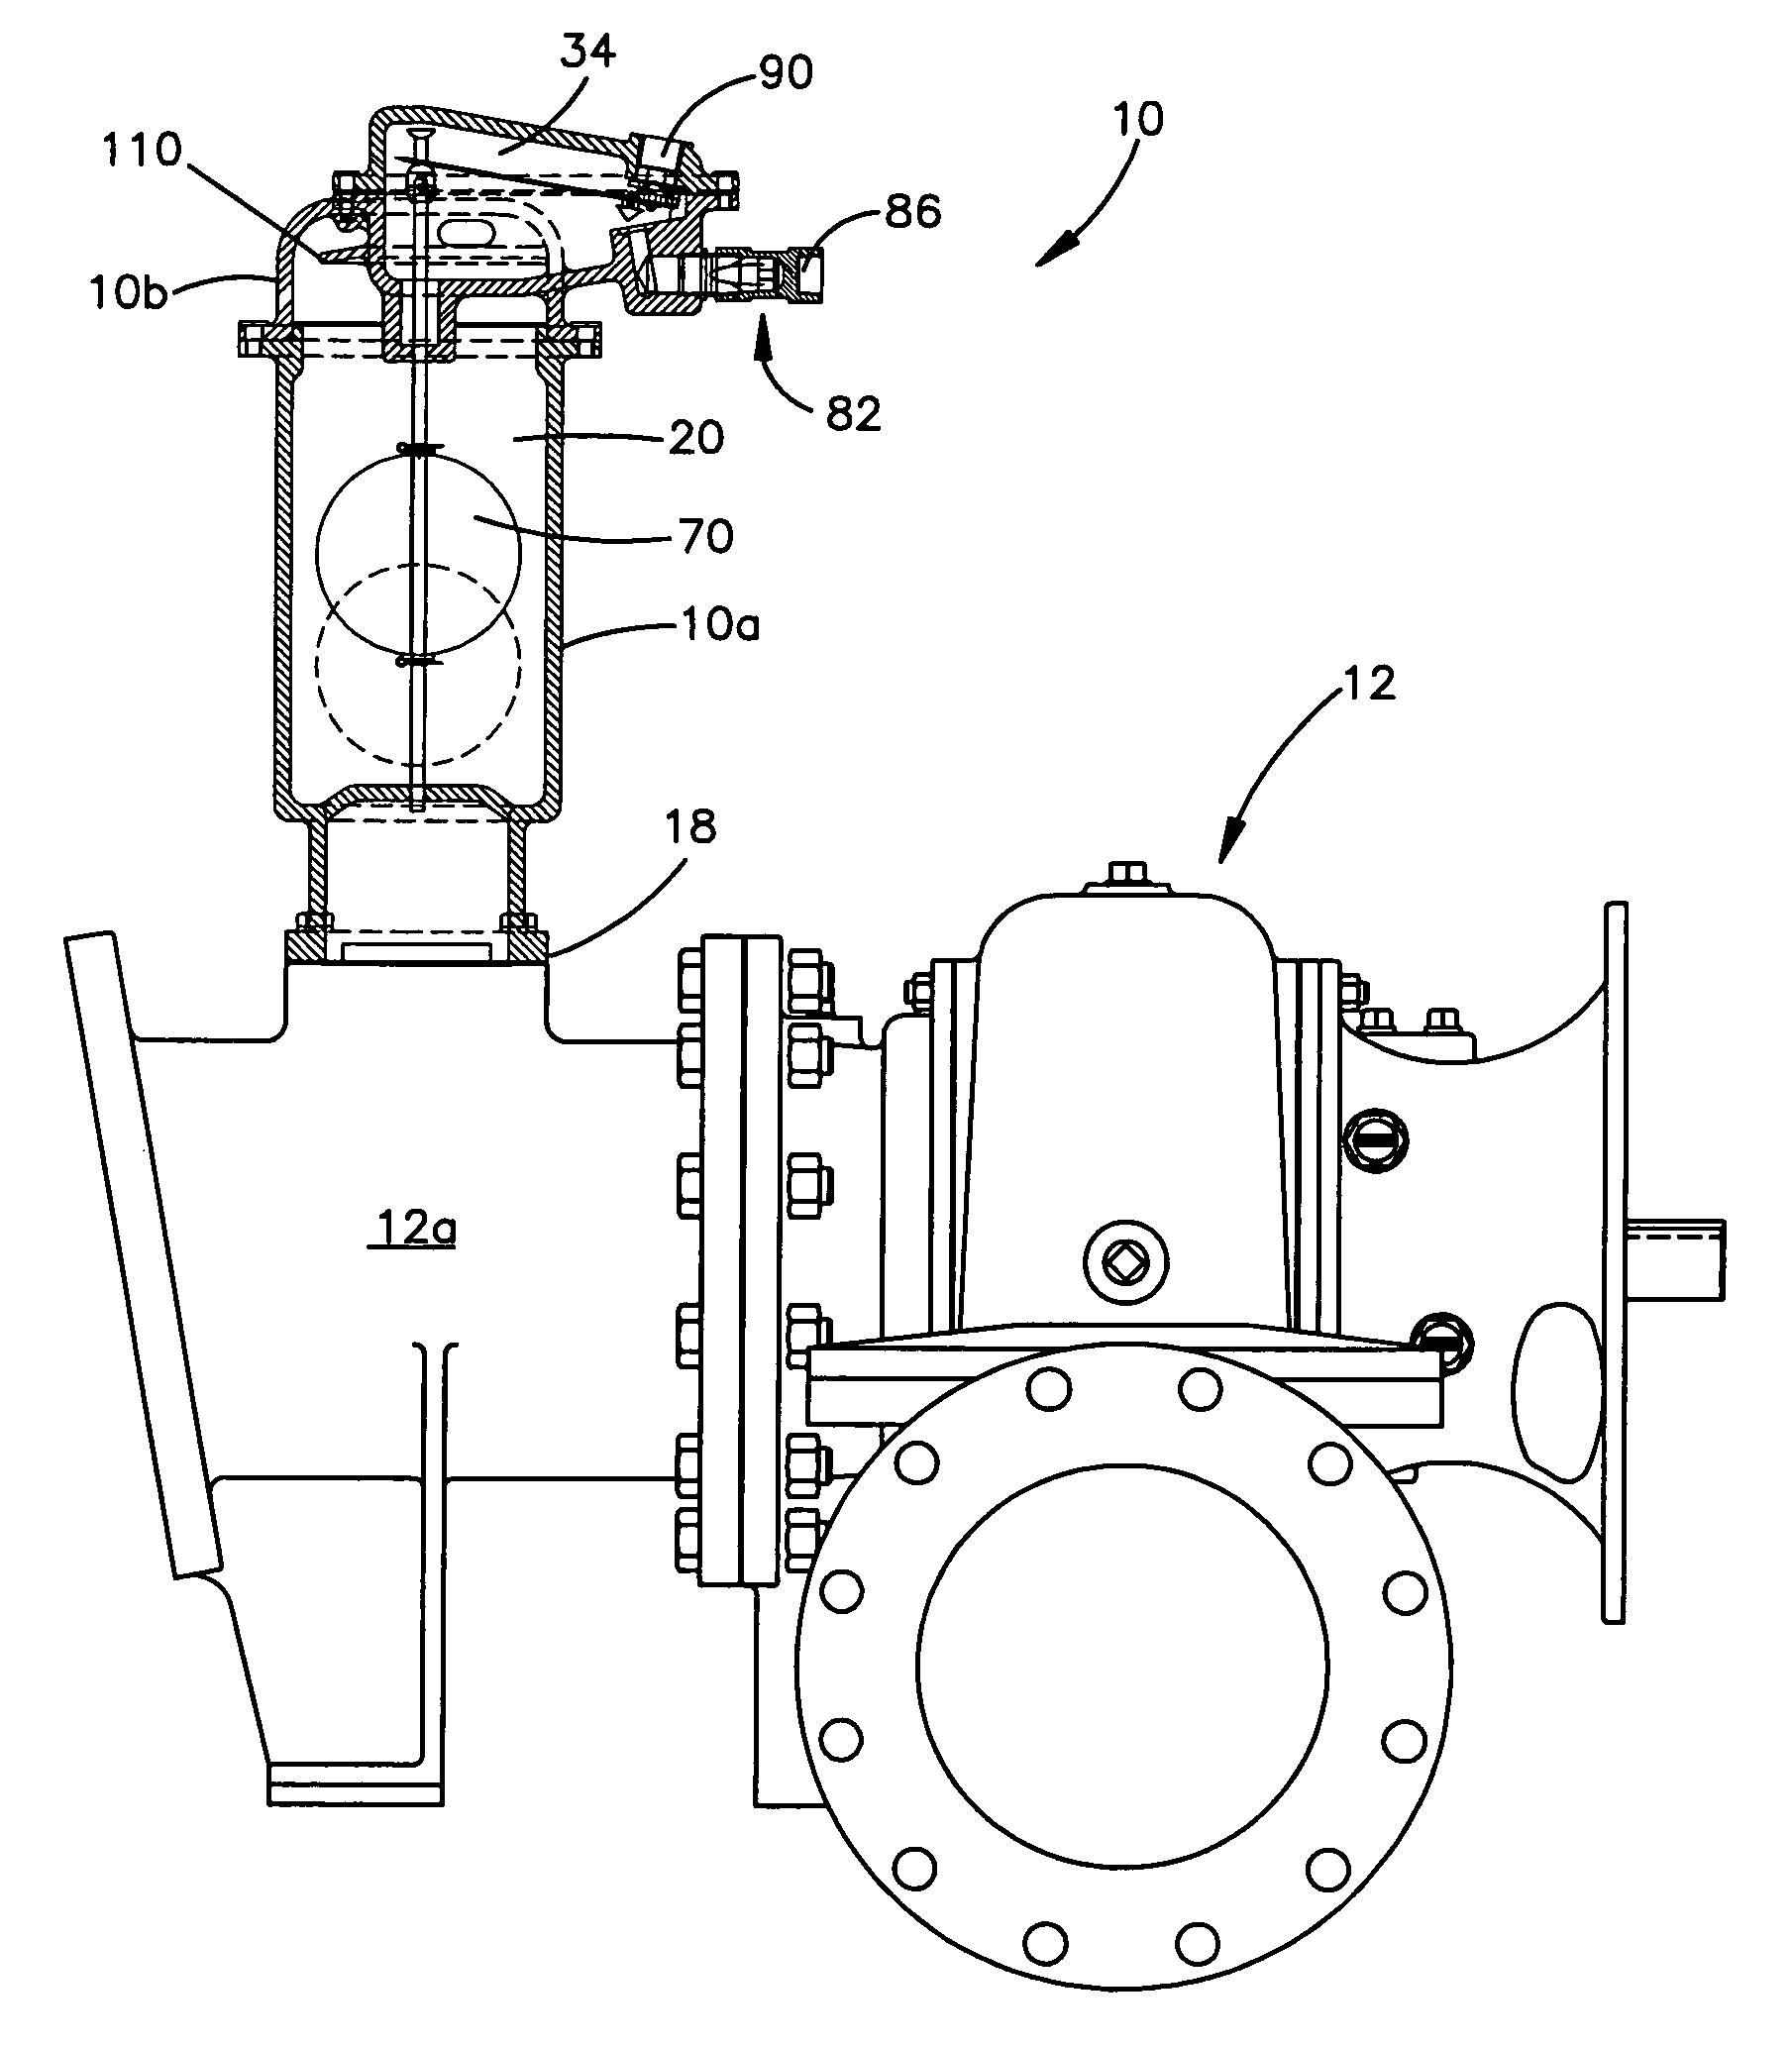 Priming apparatus for a centrifugal pump